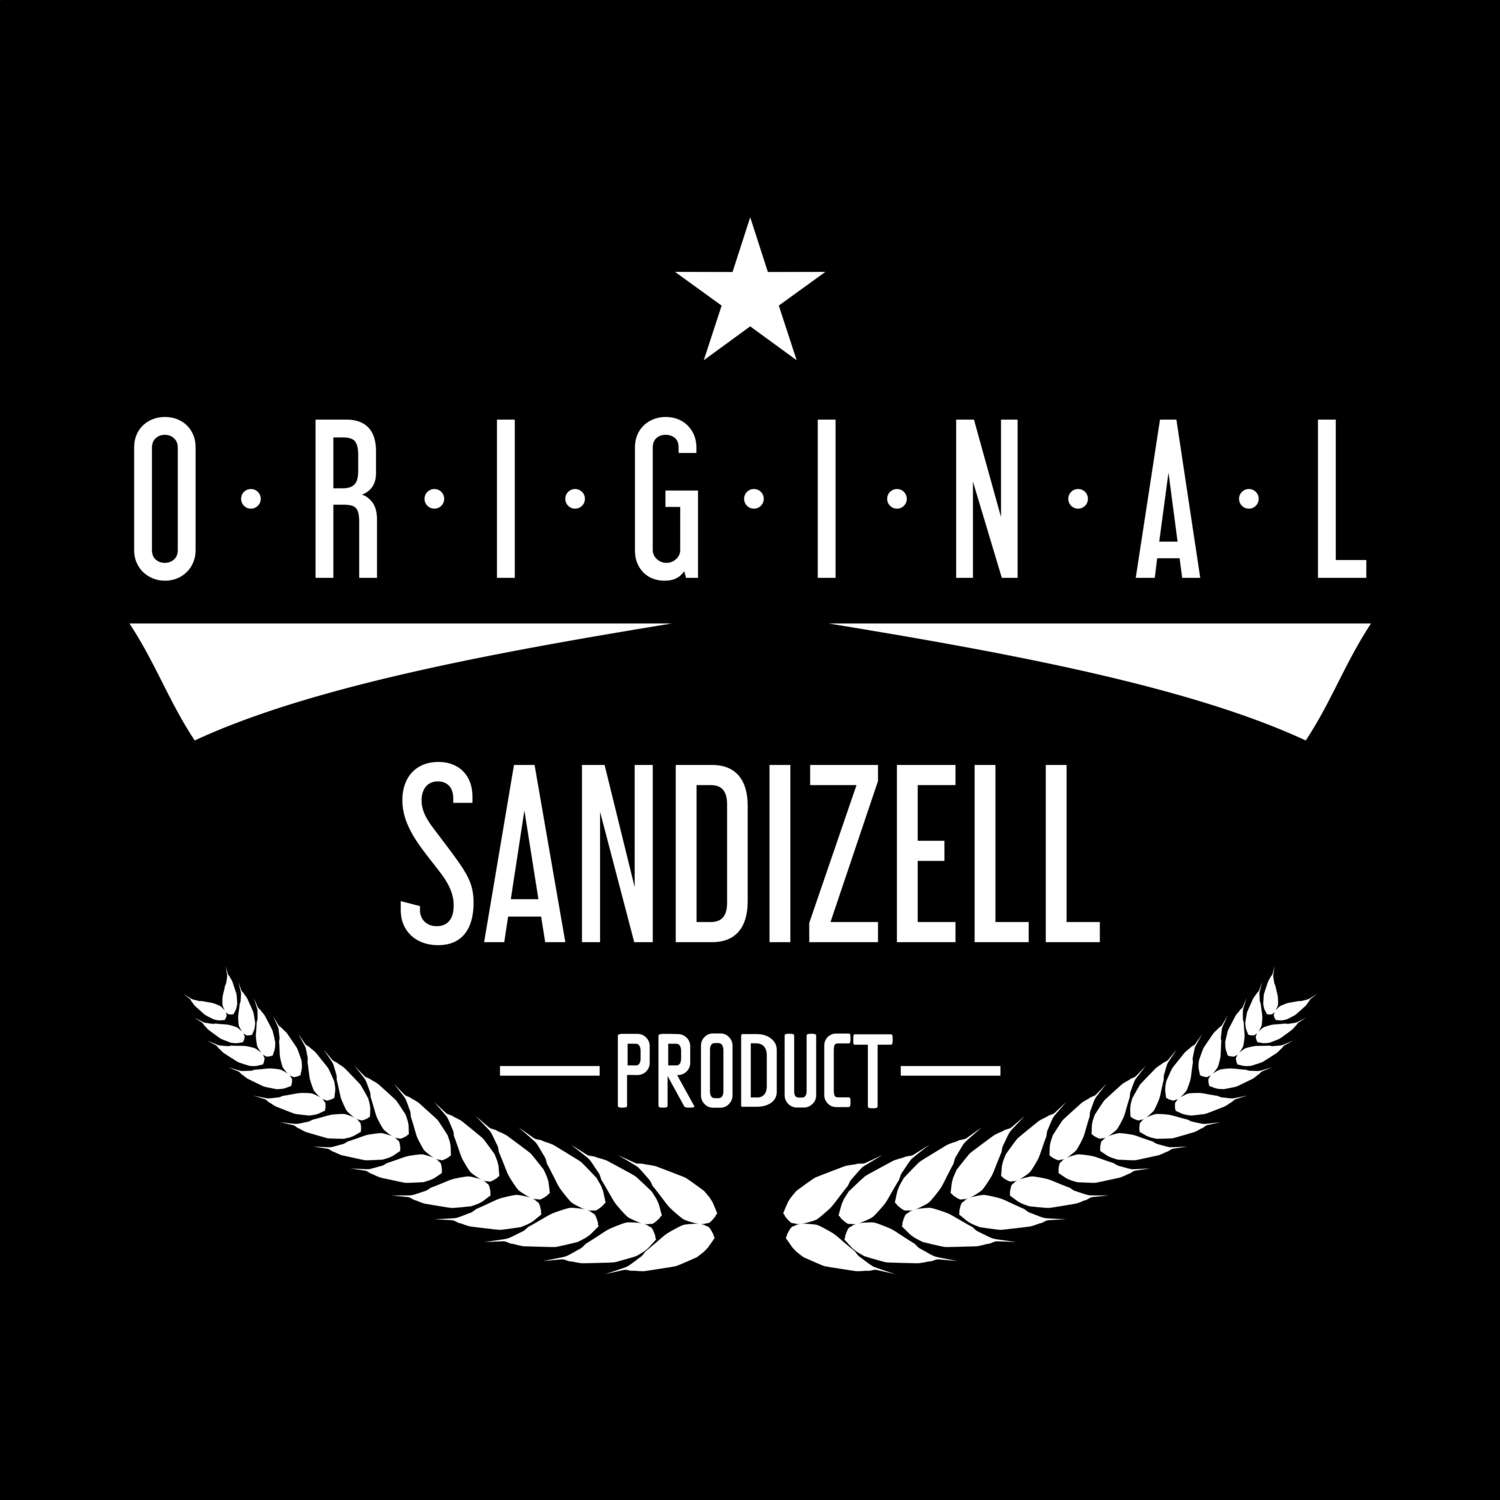 Sandizell T-Shirt »Original Product«